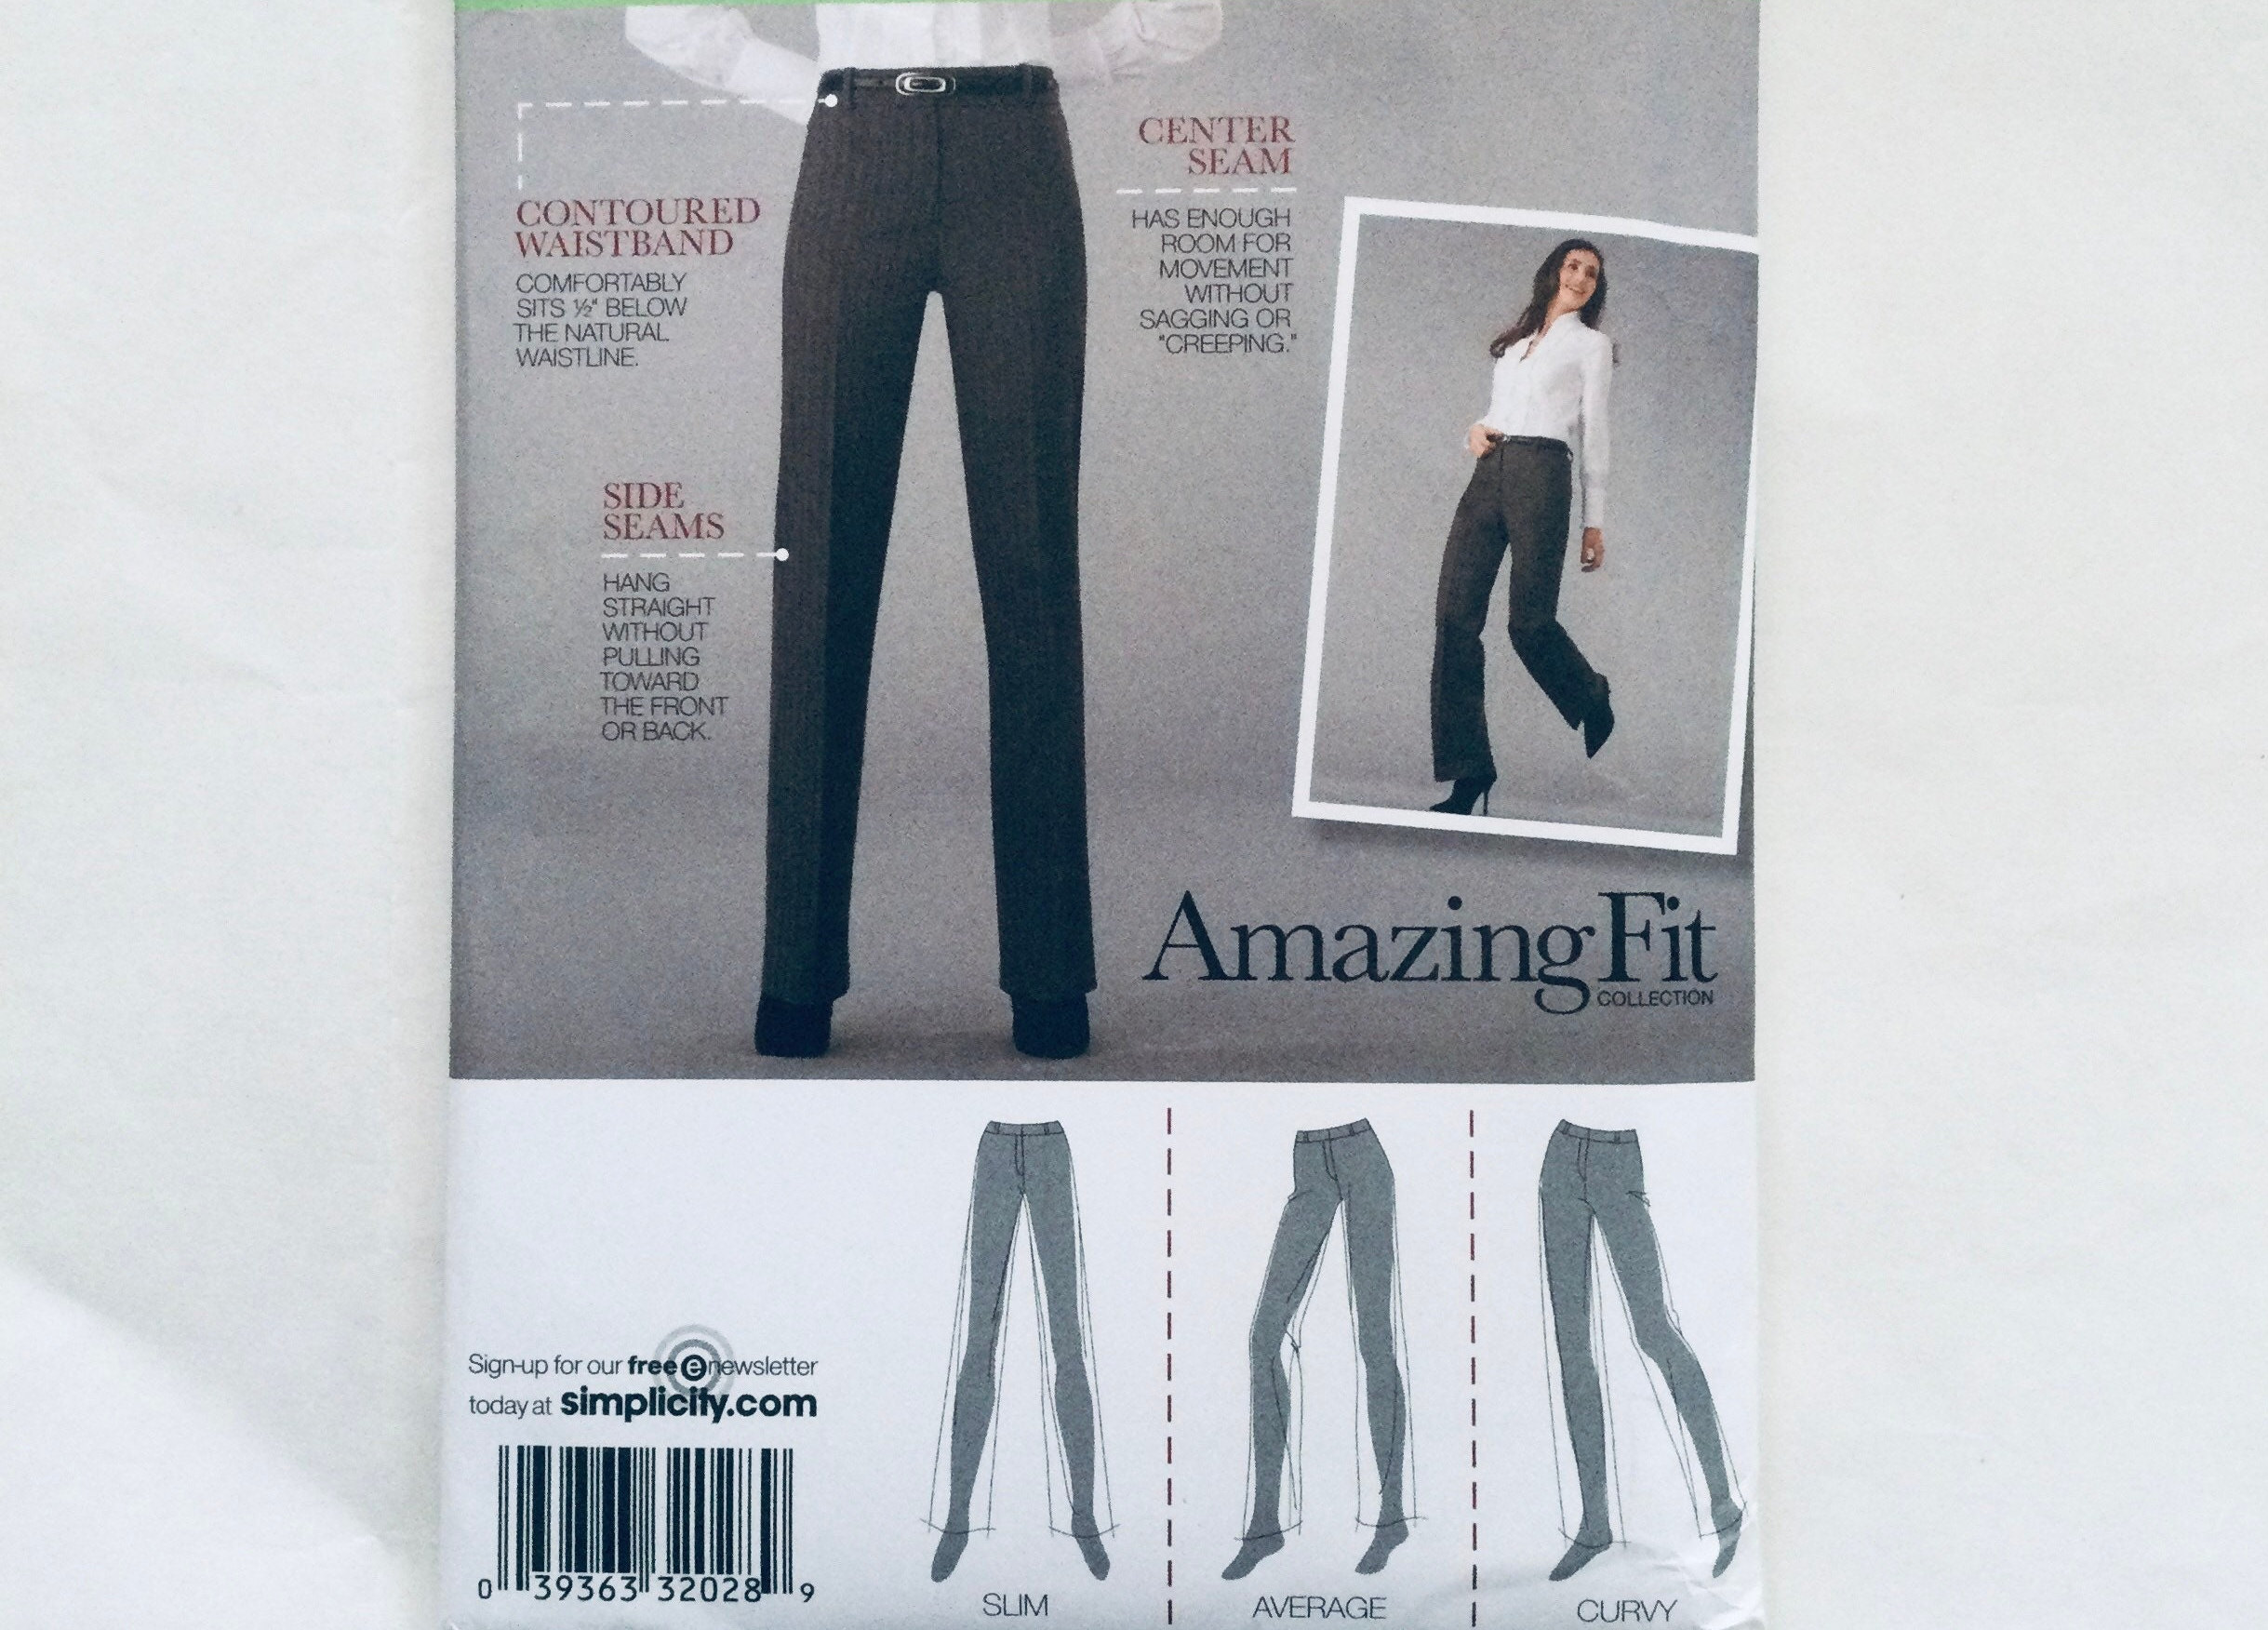 High Waisted Pants Pattern, Wide Leg Pants Pattern, Sewing Patterns for  Women, PDF, Sizes 8-16 an Amazing Pants Pattern for All Seasons 